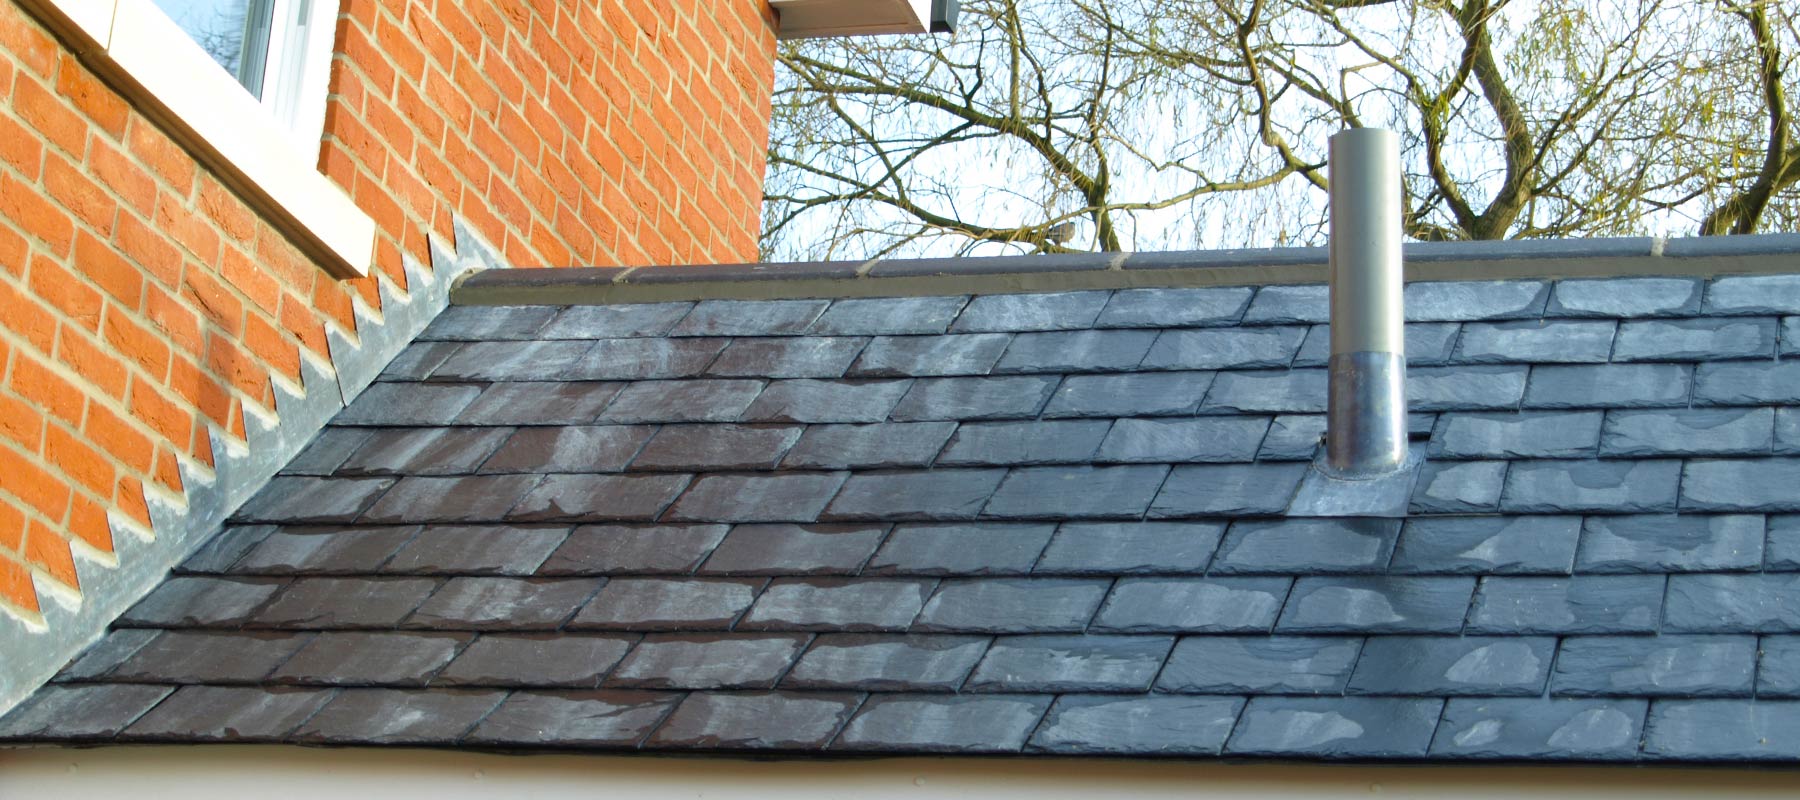 Paul Nunn Roofing Ltd-Tiling-Slating-Felt-Batten-Leadwork-Renovation-Repairs-Ipswich-Newmarket-Cambridge